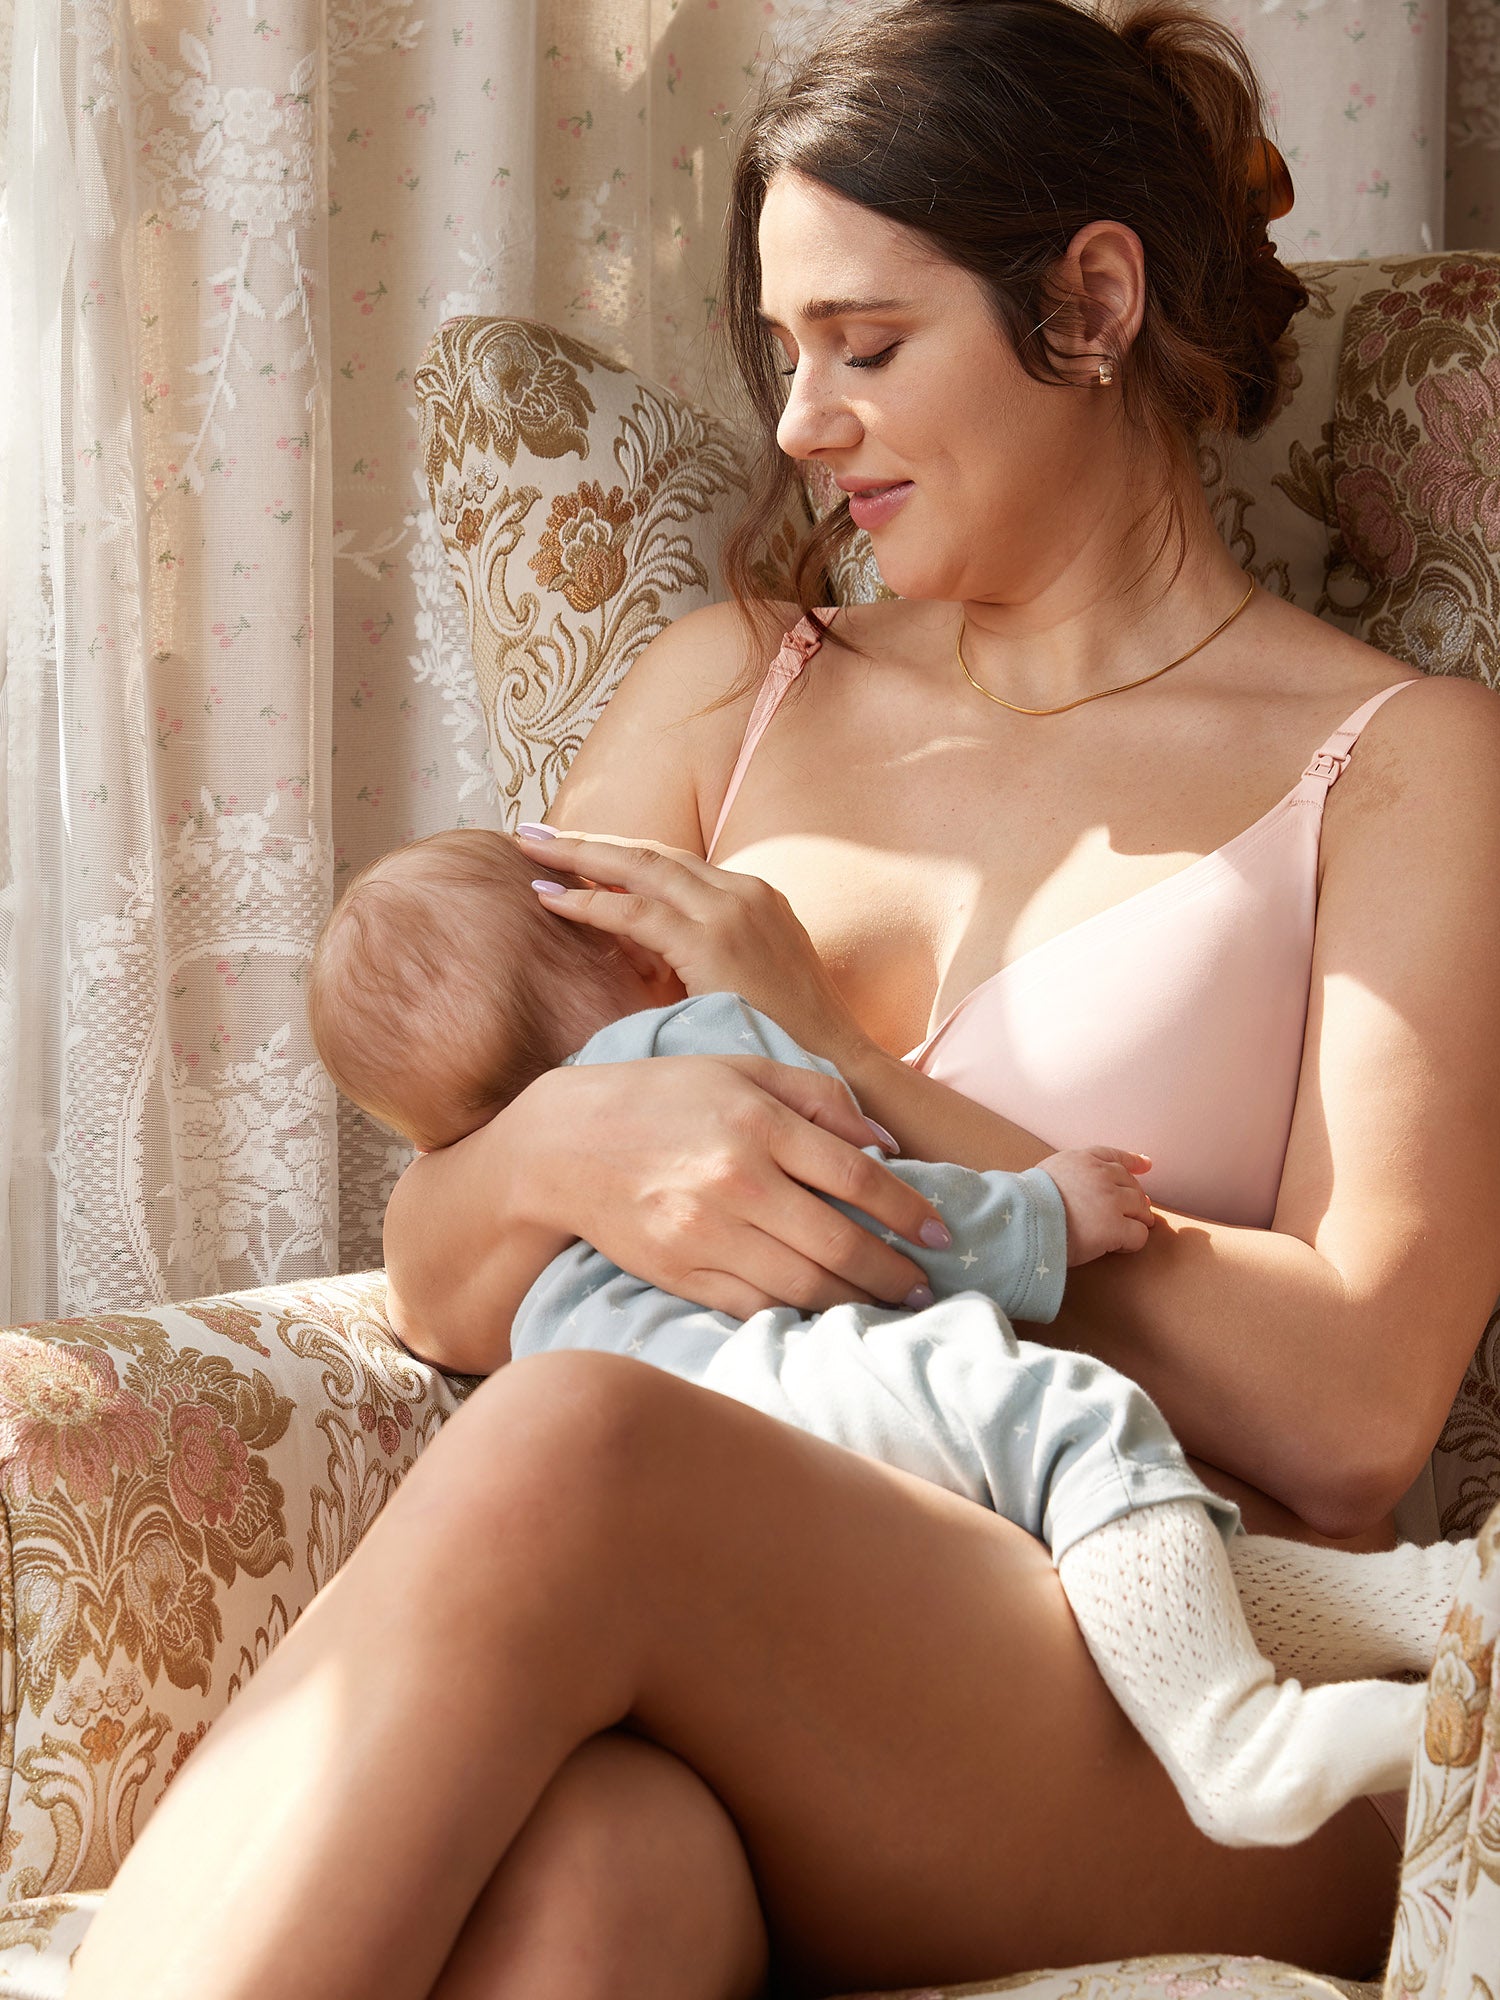 Buy Dimore Nursing Bras for Breastfeeding Seamless Maternity Bra